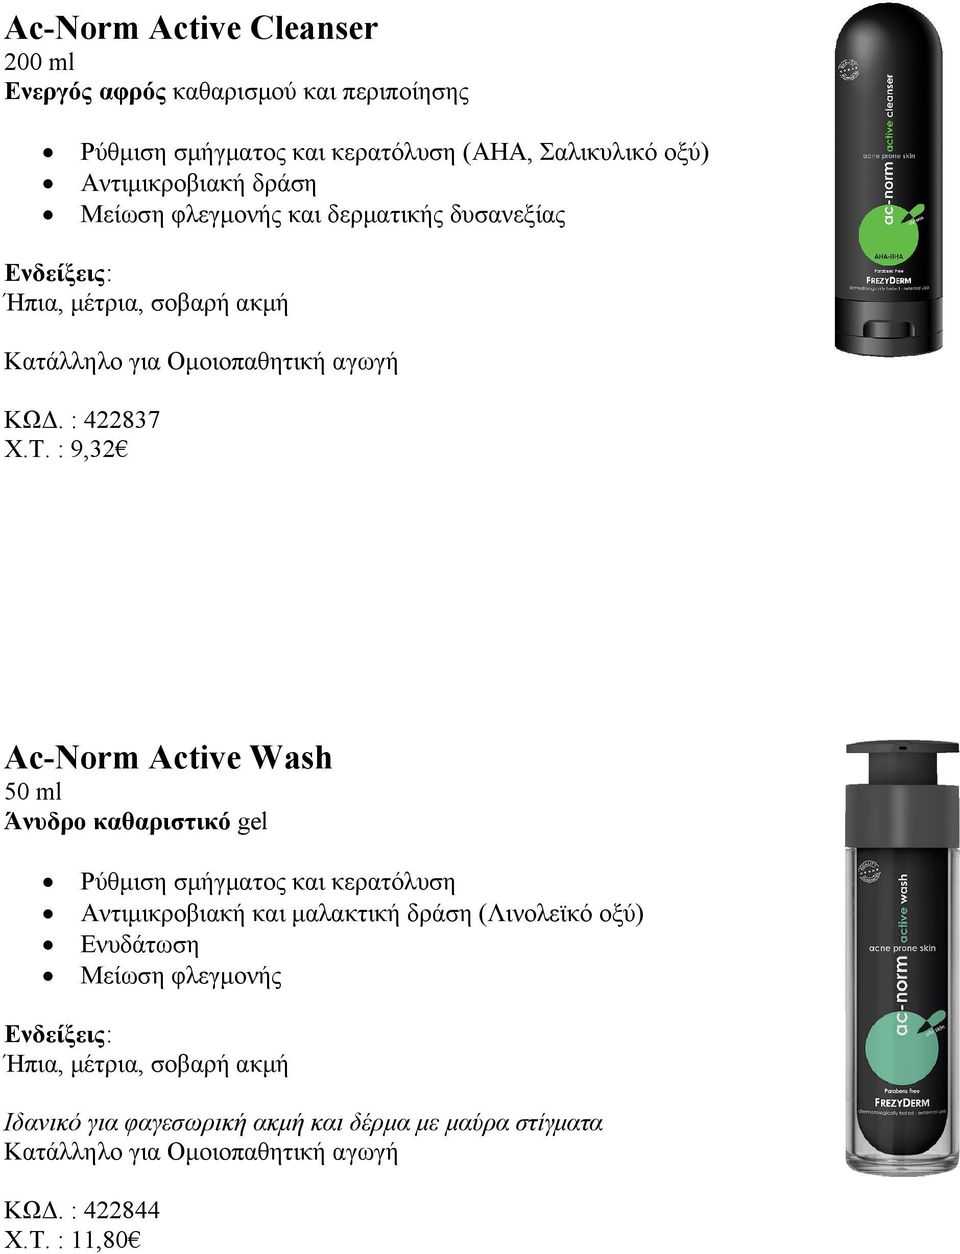 : 9,32 Ac-Norm Active Wash Άνυδρο καθαριστικό gel Ρύθμιση σμήγματος και κερατόλυση Αντιμικροβιακή και μαλακτική δράση (Λινολεϊκό οξύ) Ενυδάτωση